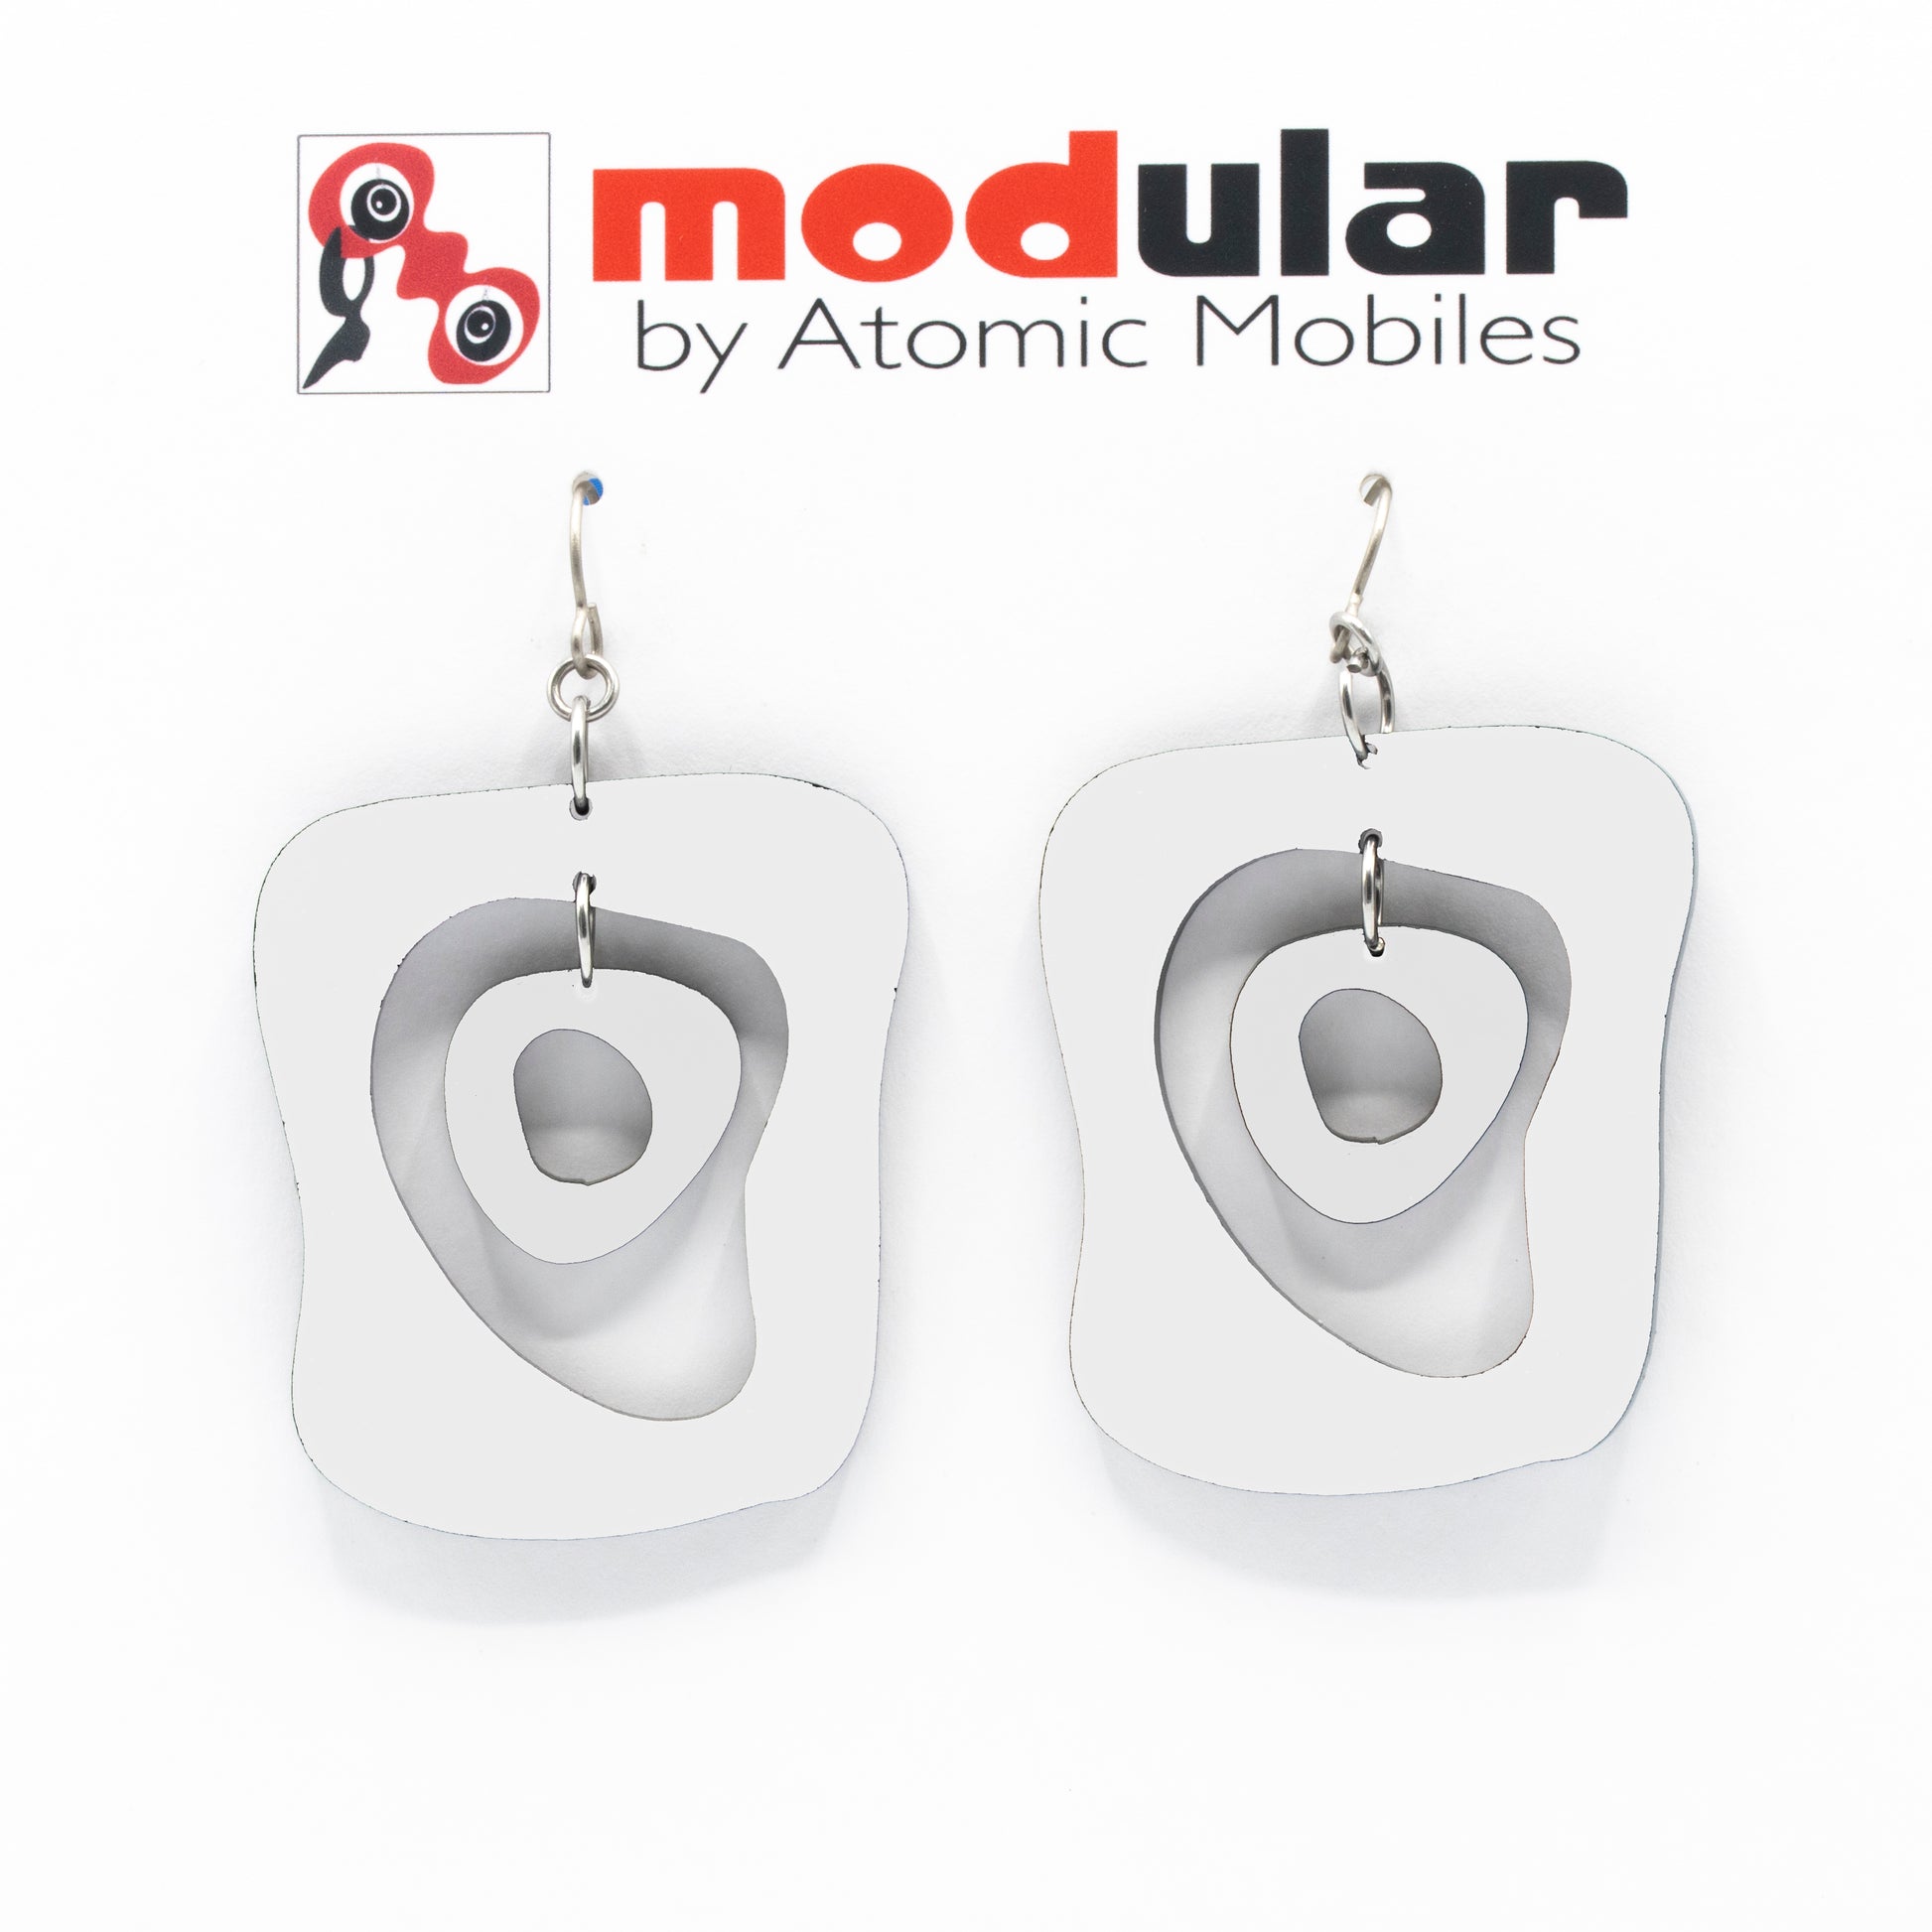 MODular Earrings - Mid Mod Statement Earrings in White by AtomicMobiles.com - mid century inspired modern art dangle earrings